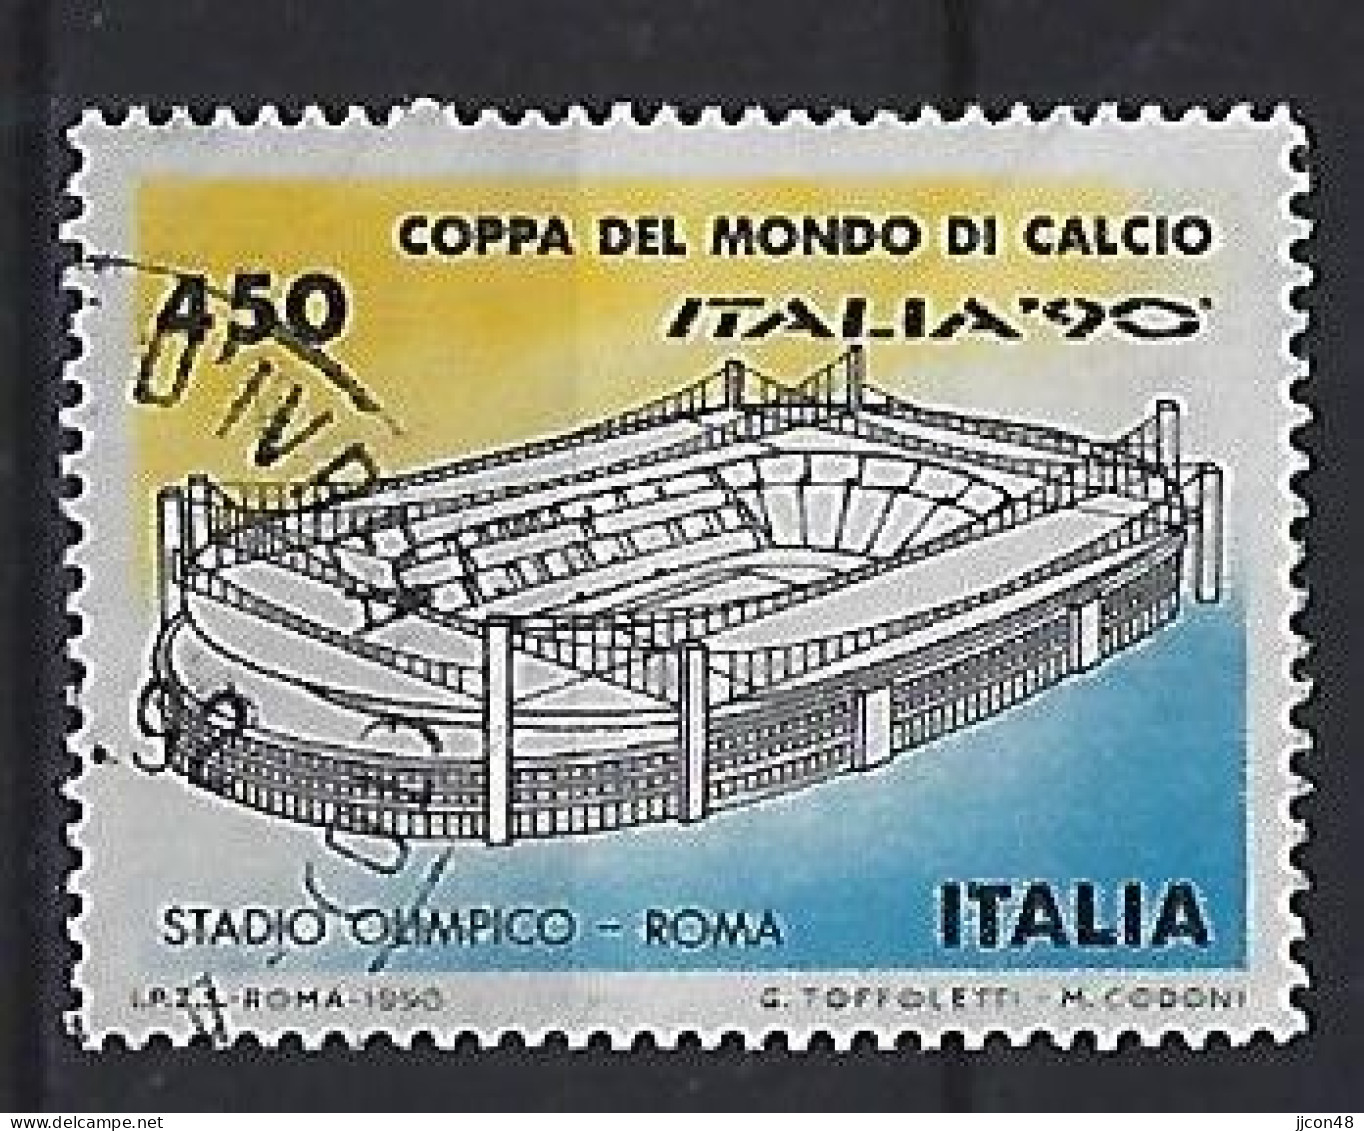 Italy 1990  Fussball-Weltmeisterschaft  (o) Mi.2107 - 1981-90: Used